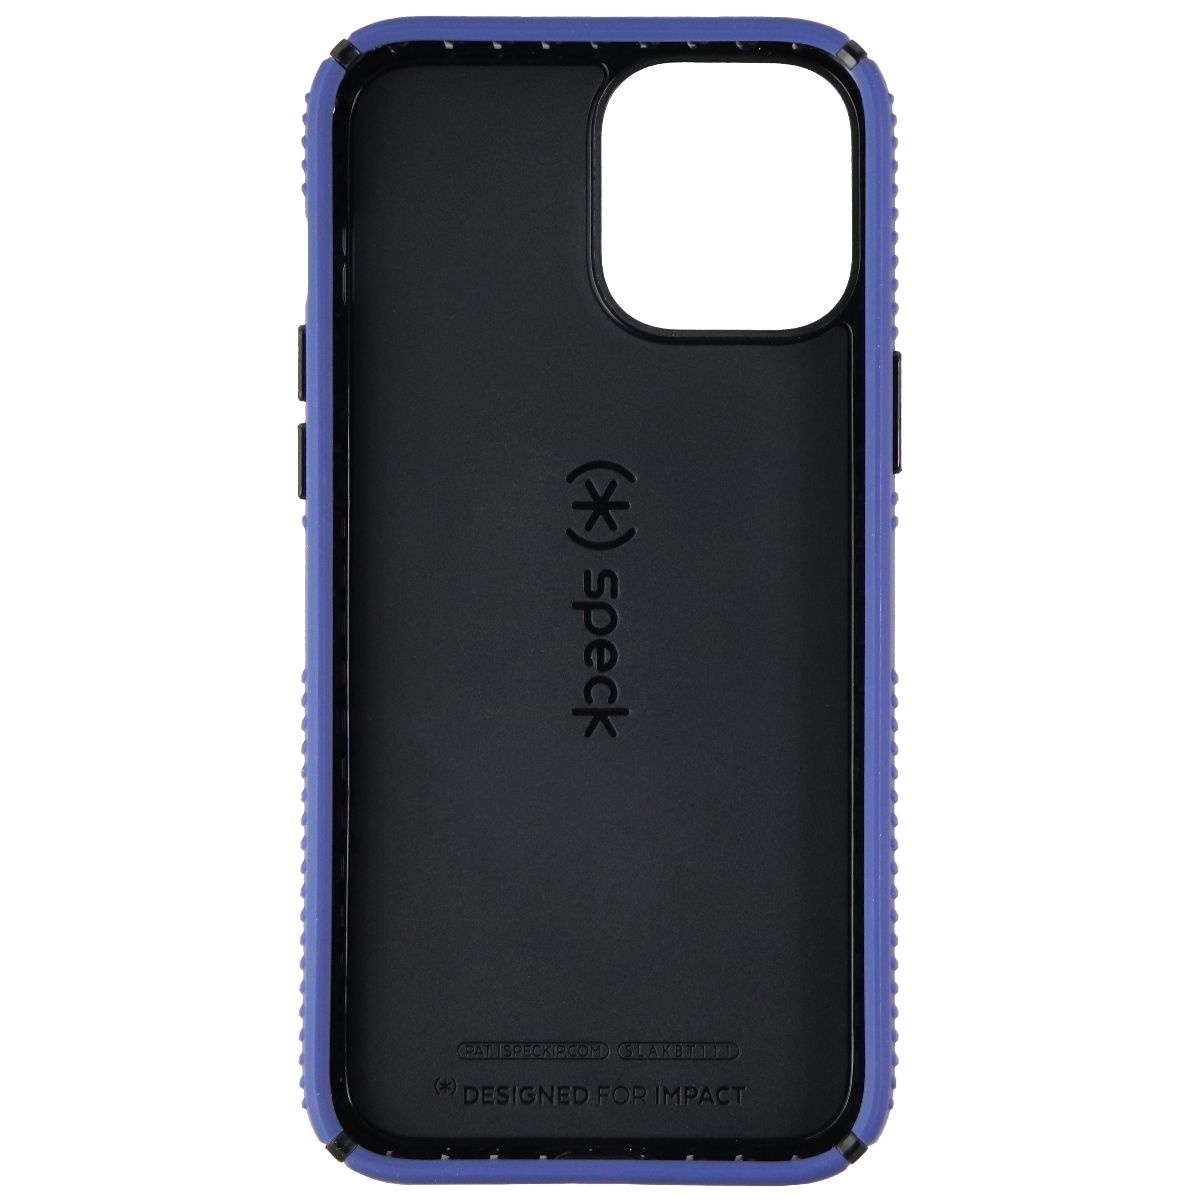 Speck Presidio2 Grip Series Case For IPhone 12 Pro Max - Coastal Blue/Black